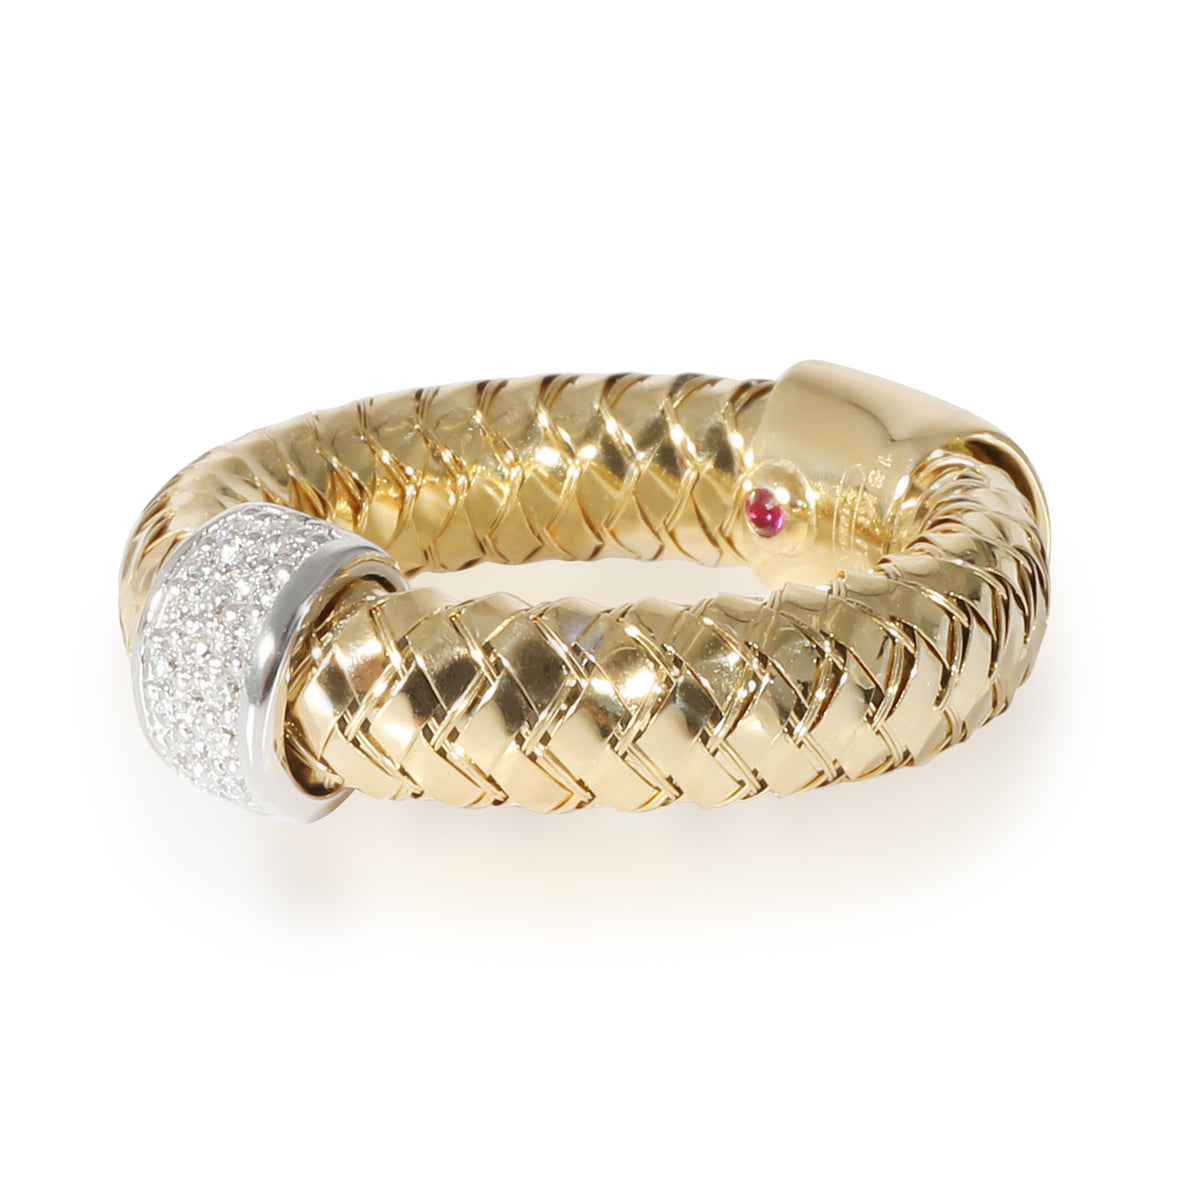 Roberto Coin Primavera Diamond Ring in 18K Yellow Gold 0.1 CTW